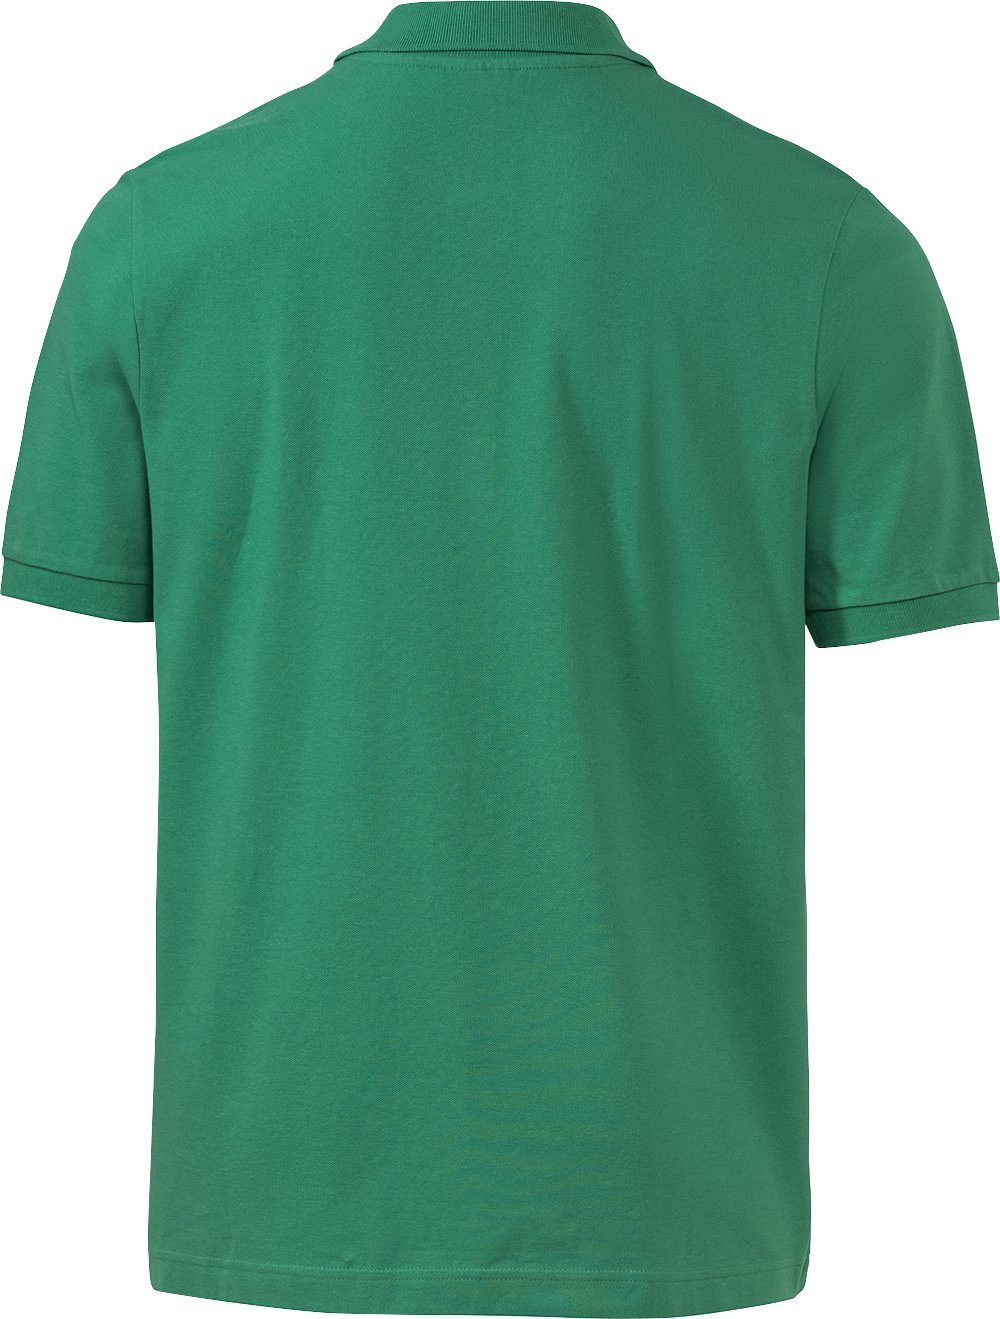 Baumwolle Umbro aus Poloshirt körniges grün Piqué-Gewebe